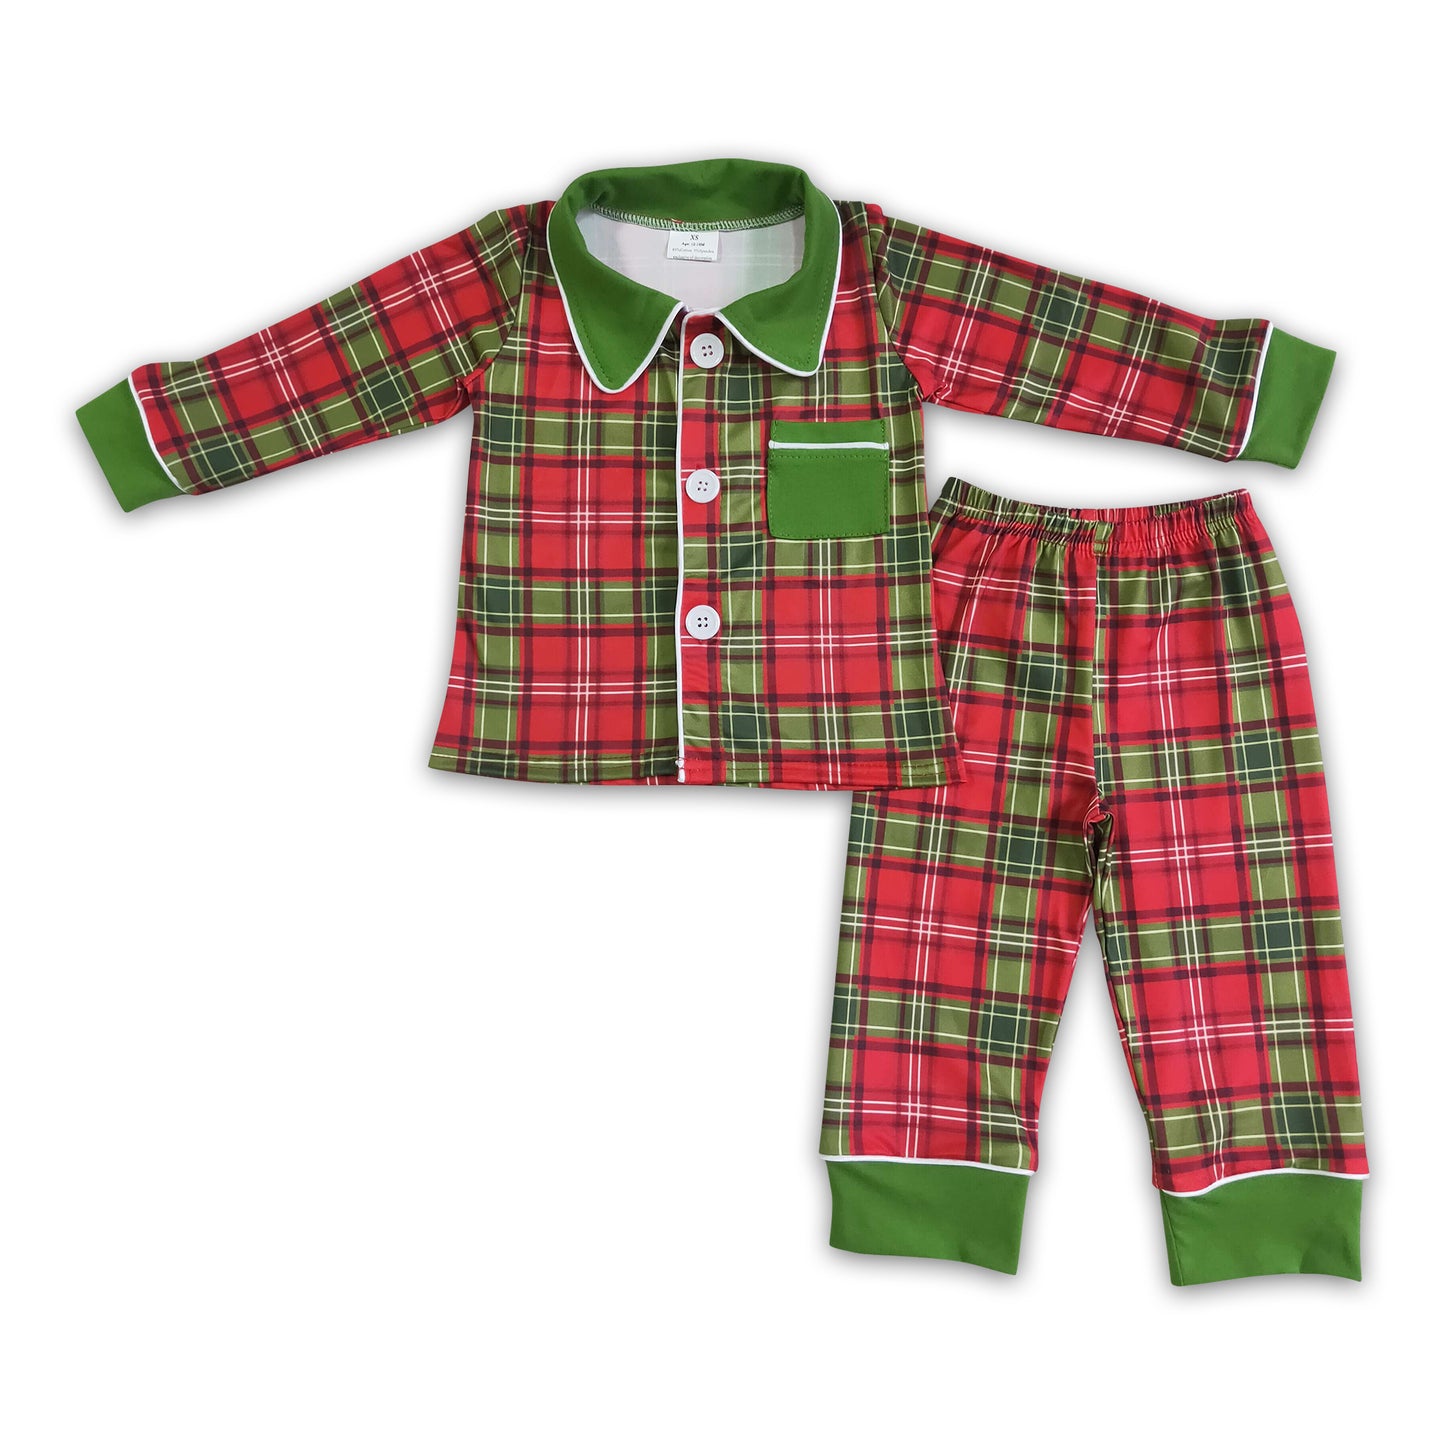 Red and green plaid sleepwear boy Christmas pajamas